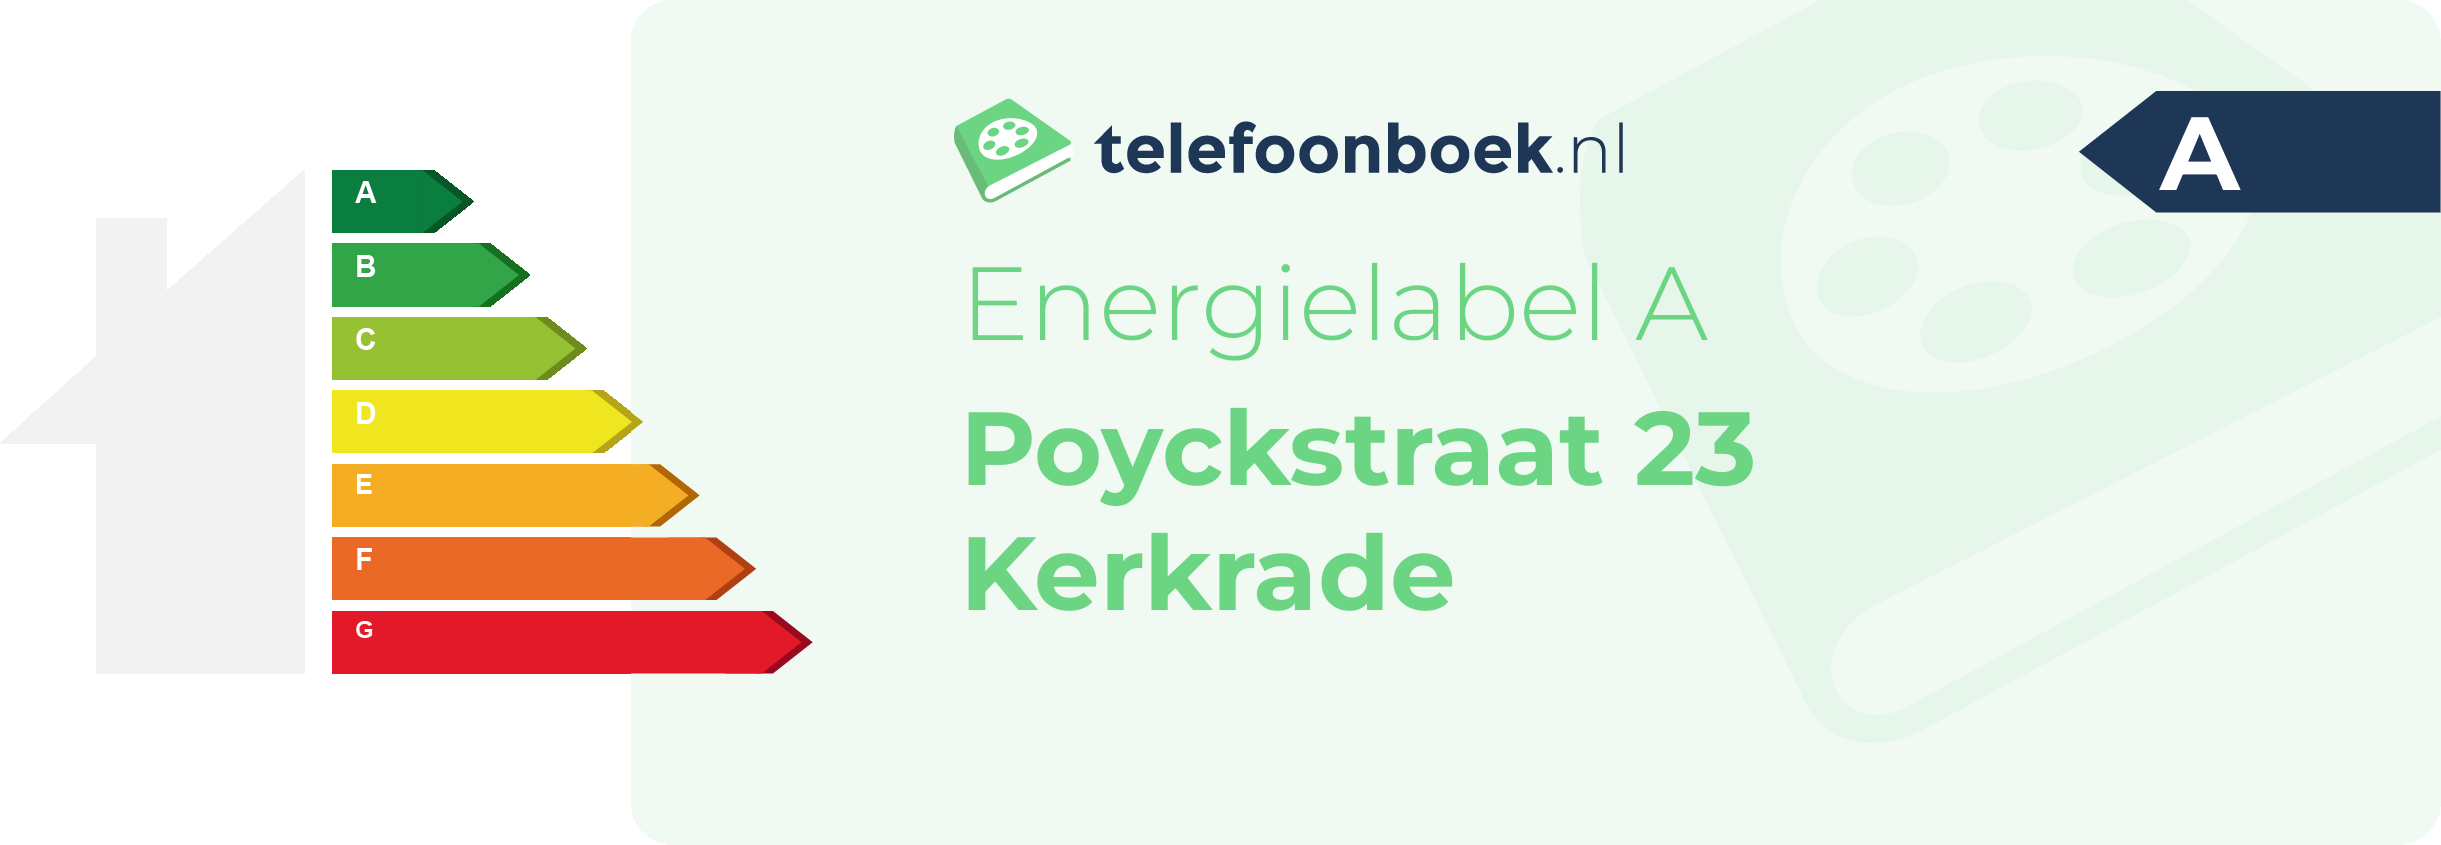 Energielabel Poyckstraat 23 Kerkrade